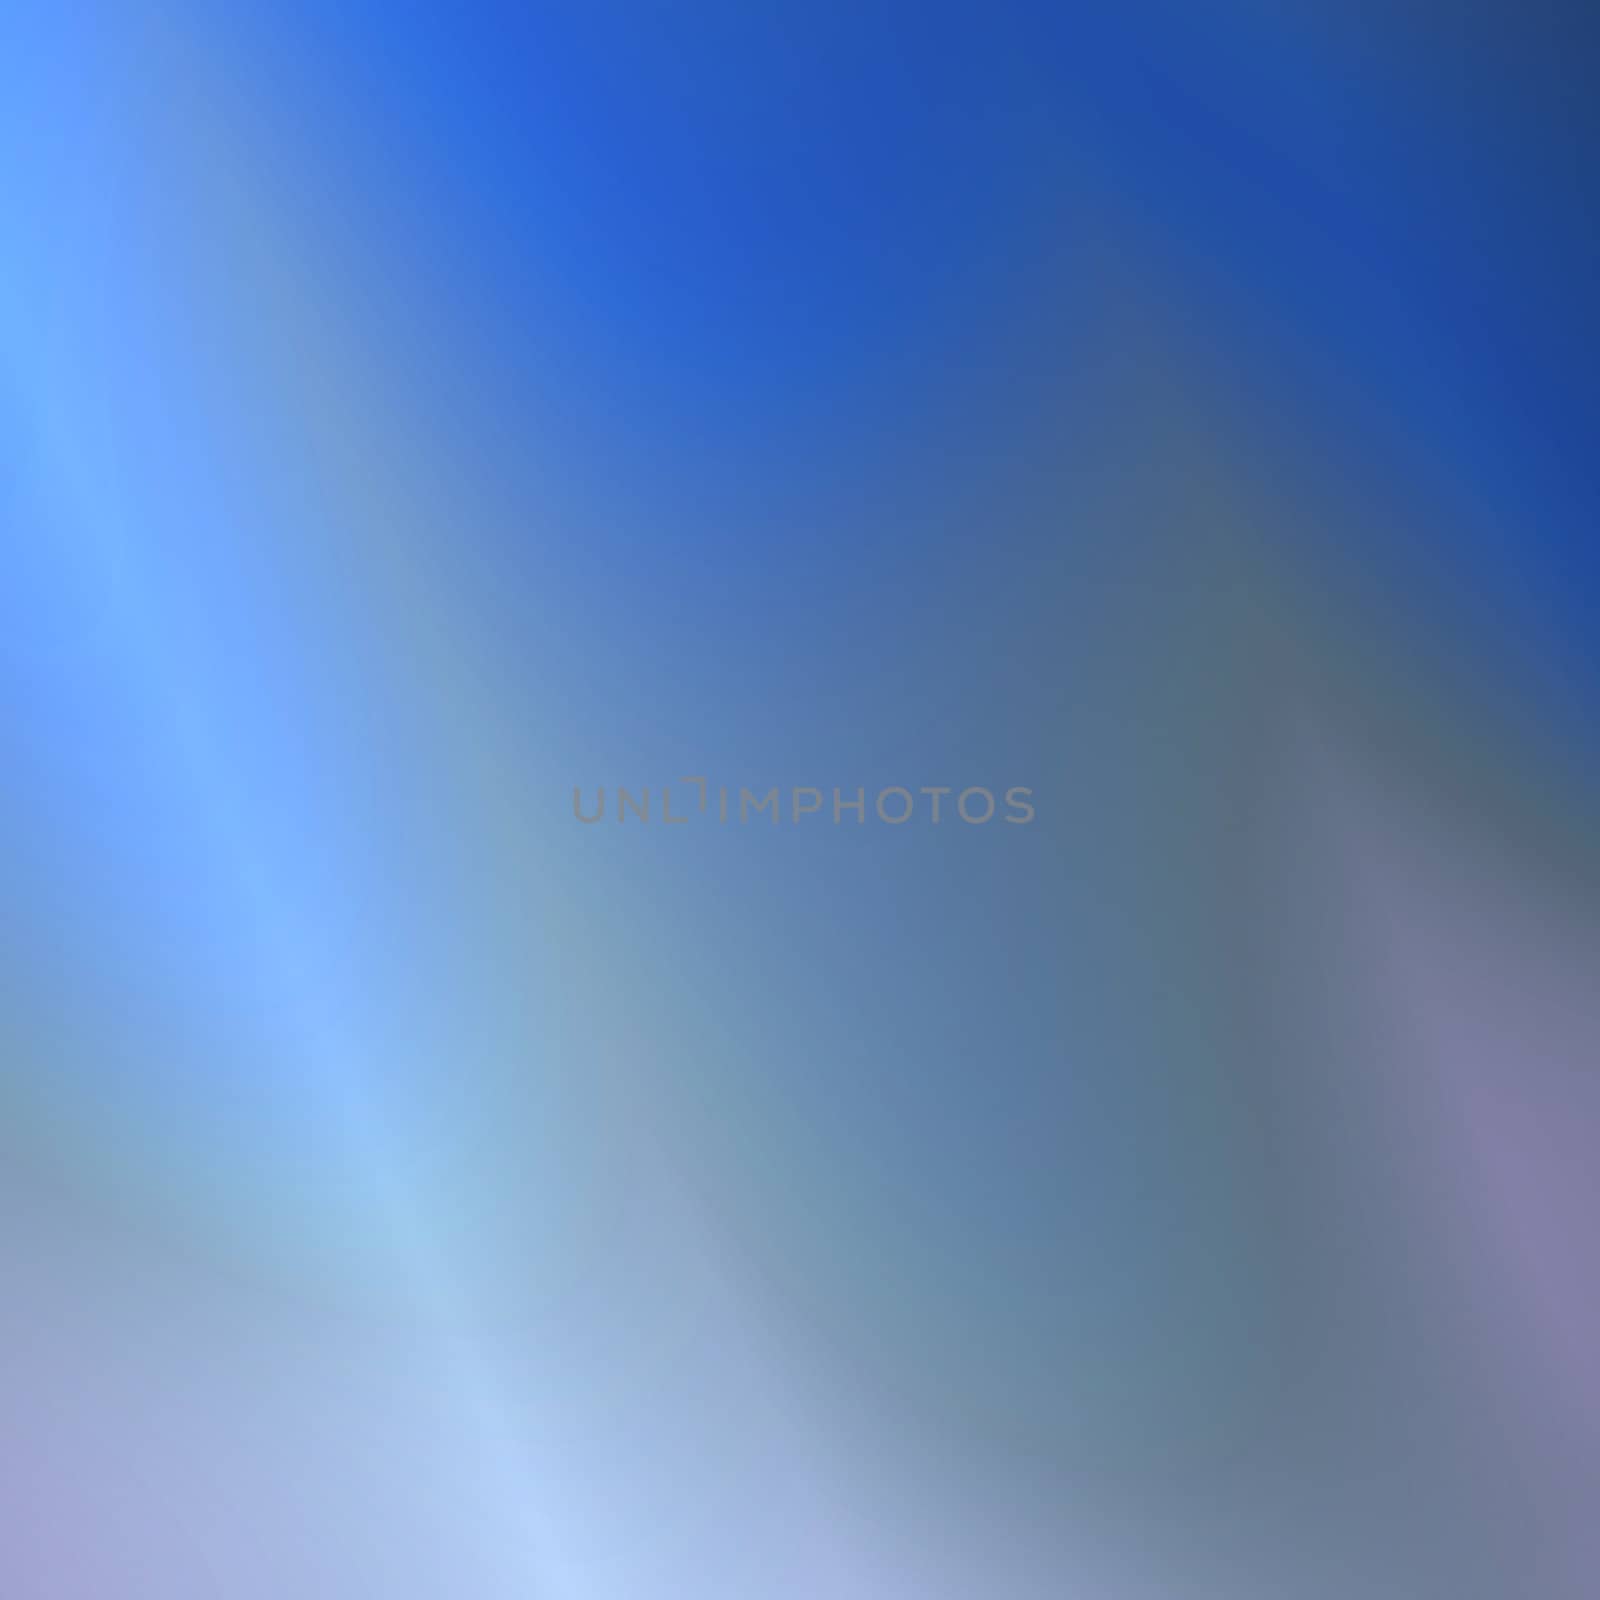 Soft Blue Background by patballard